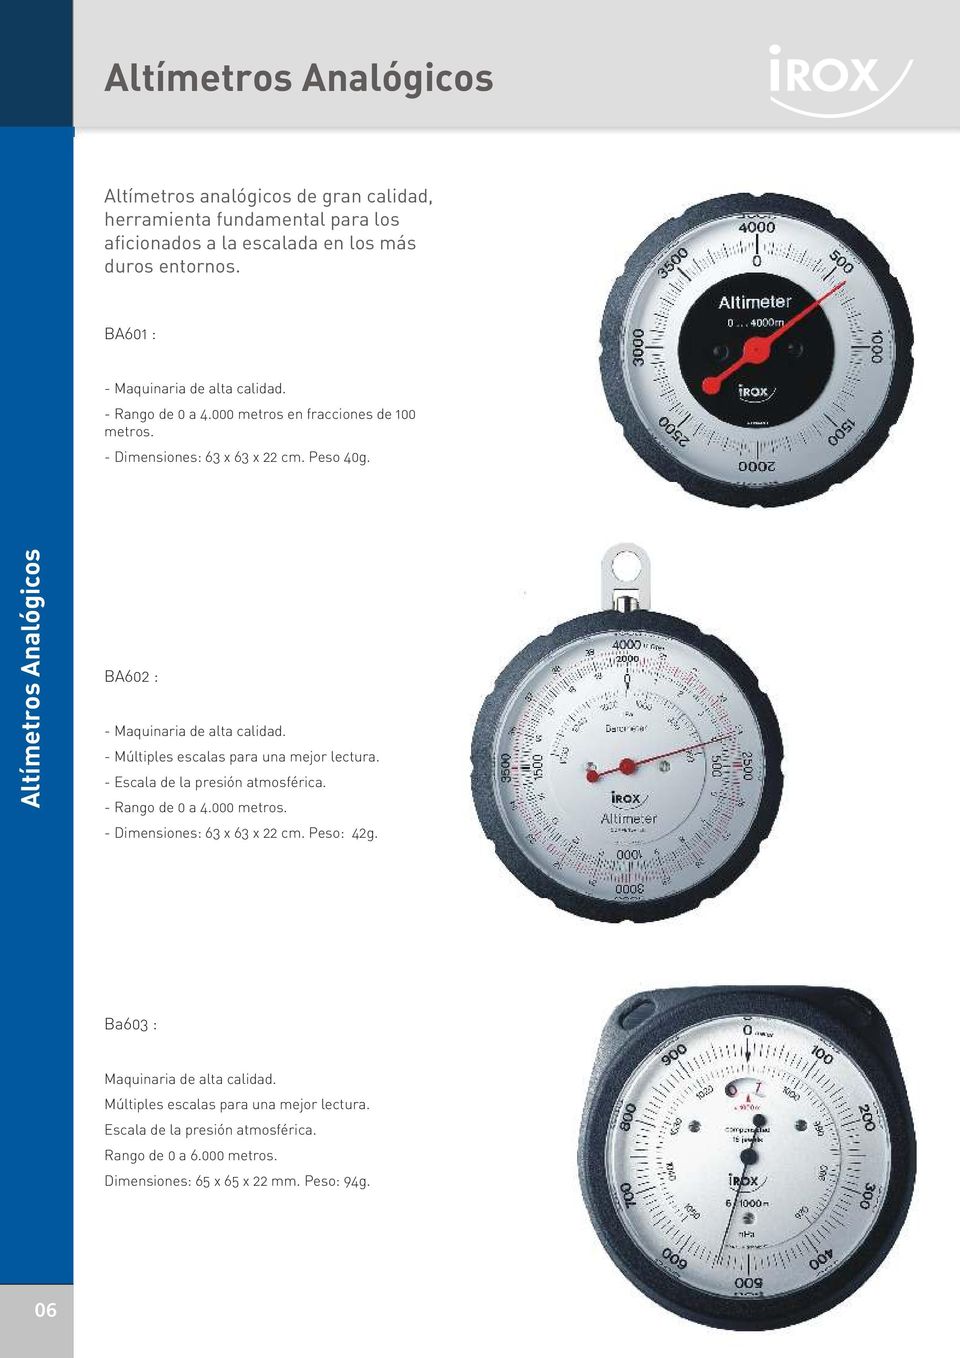 Altímetros Analógicos BA602 : - Maquinaria de alta calidad. - Múltiples escalas para una mejor lectura. - Escala de la presión atmosférica. - Rango de 0 a 4.000 metros.